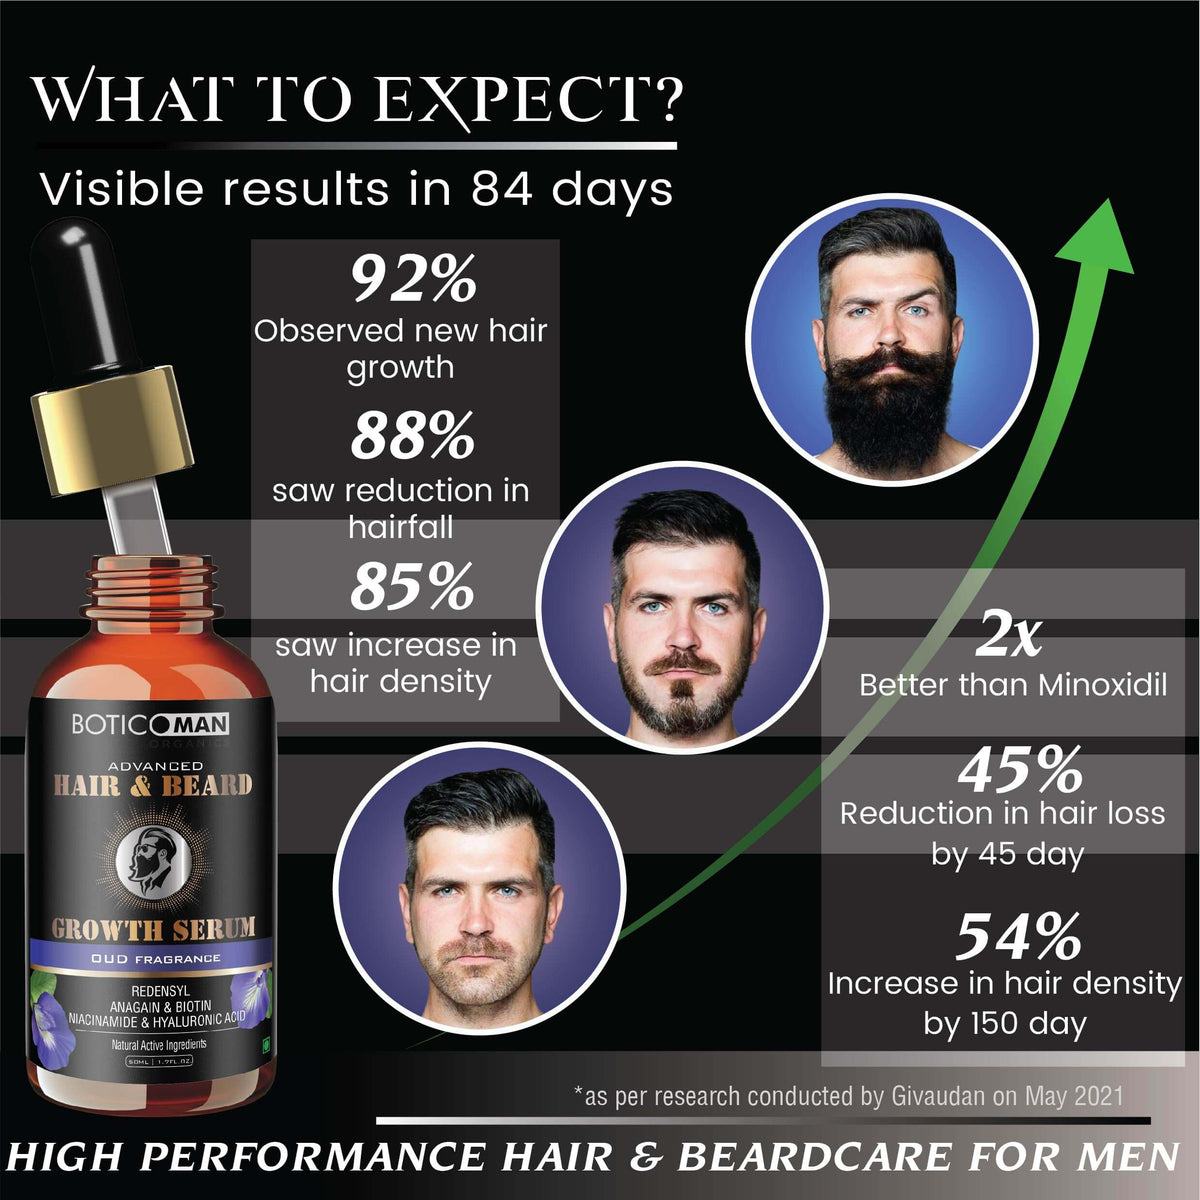 ADVANCED HAIR AND BEARD GROWTH SERUM FOR MEN